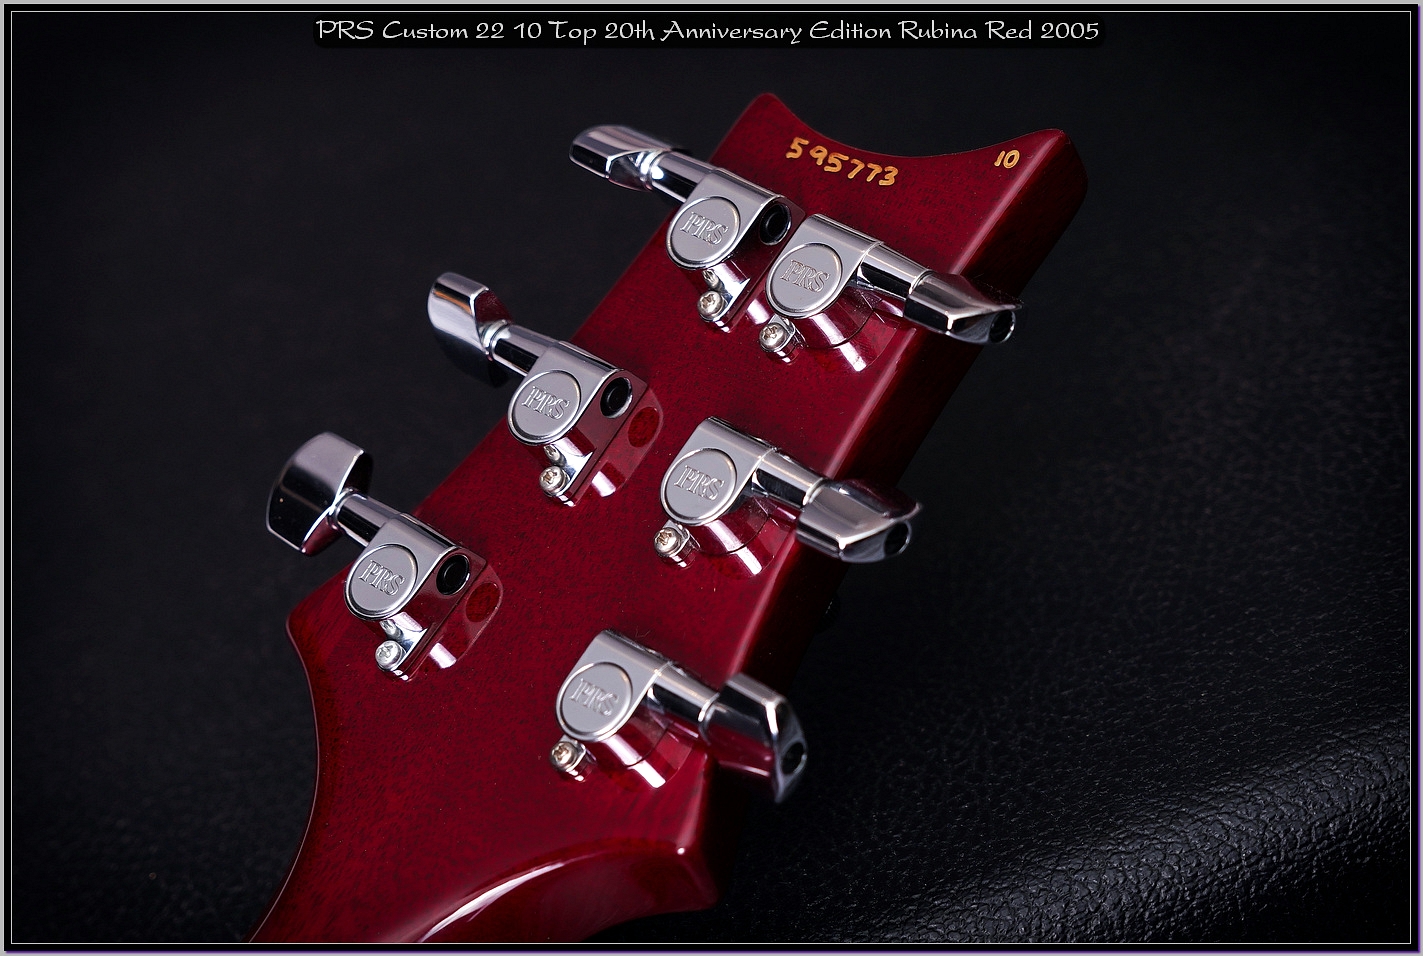 PRS Custom 22 10 Top 20th Anniversary Rubina Red 2005